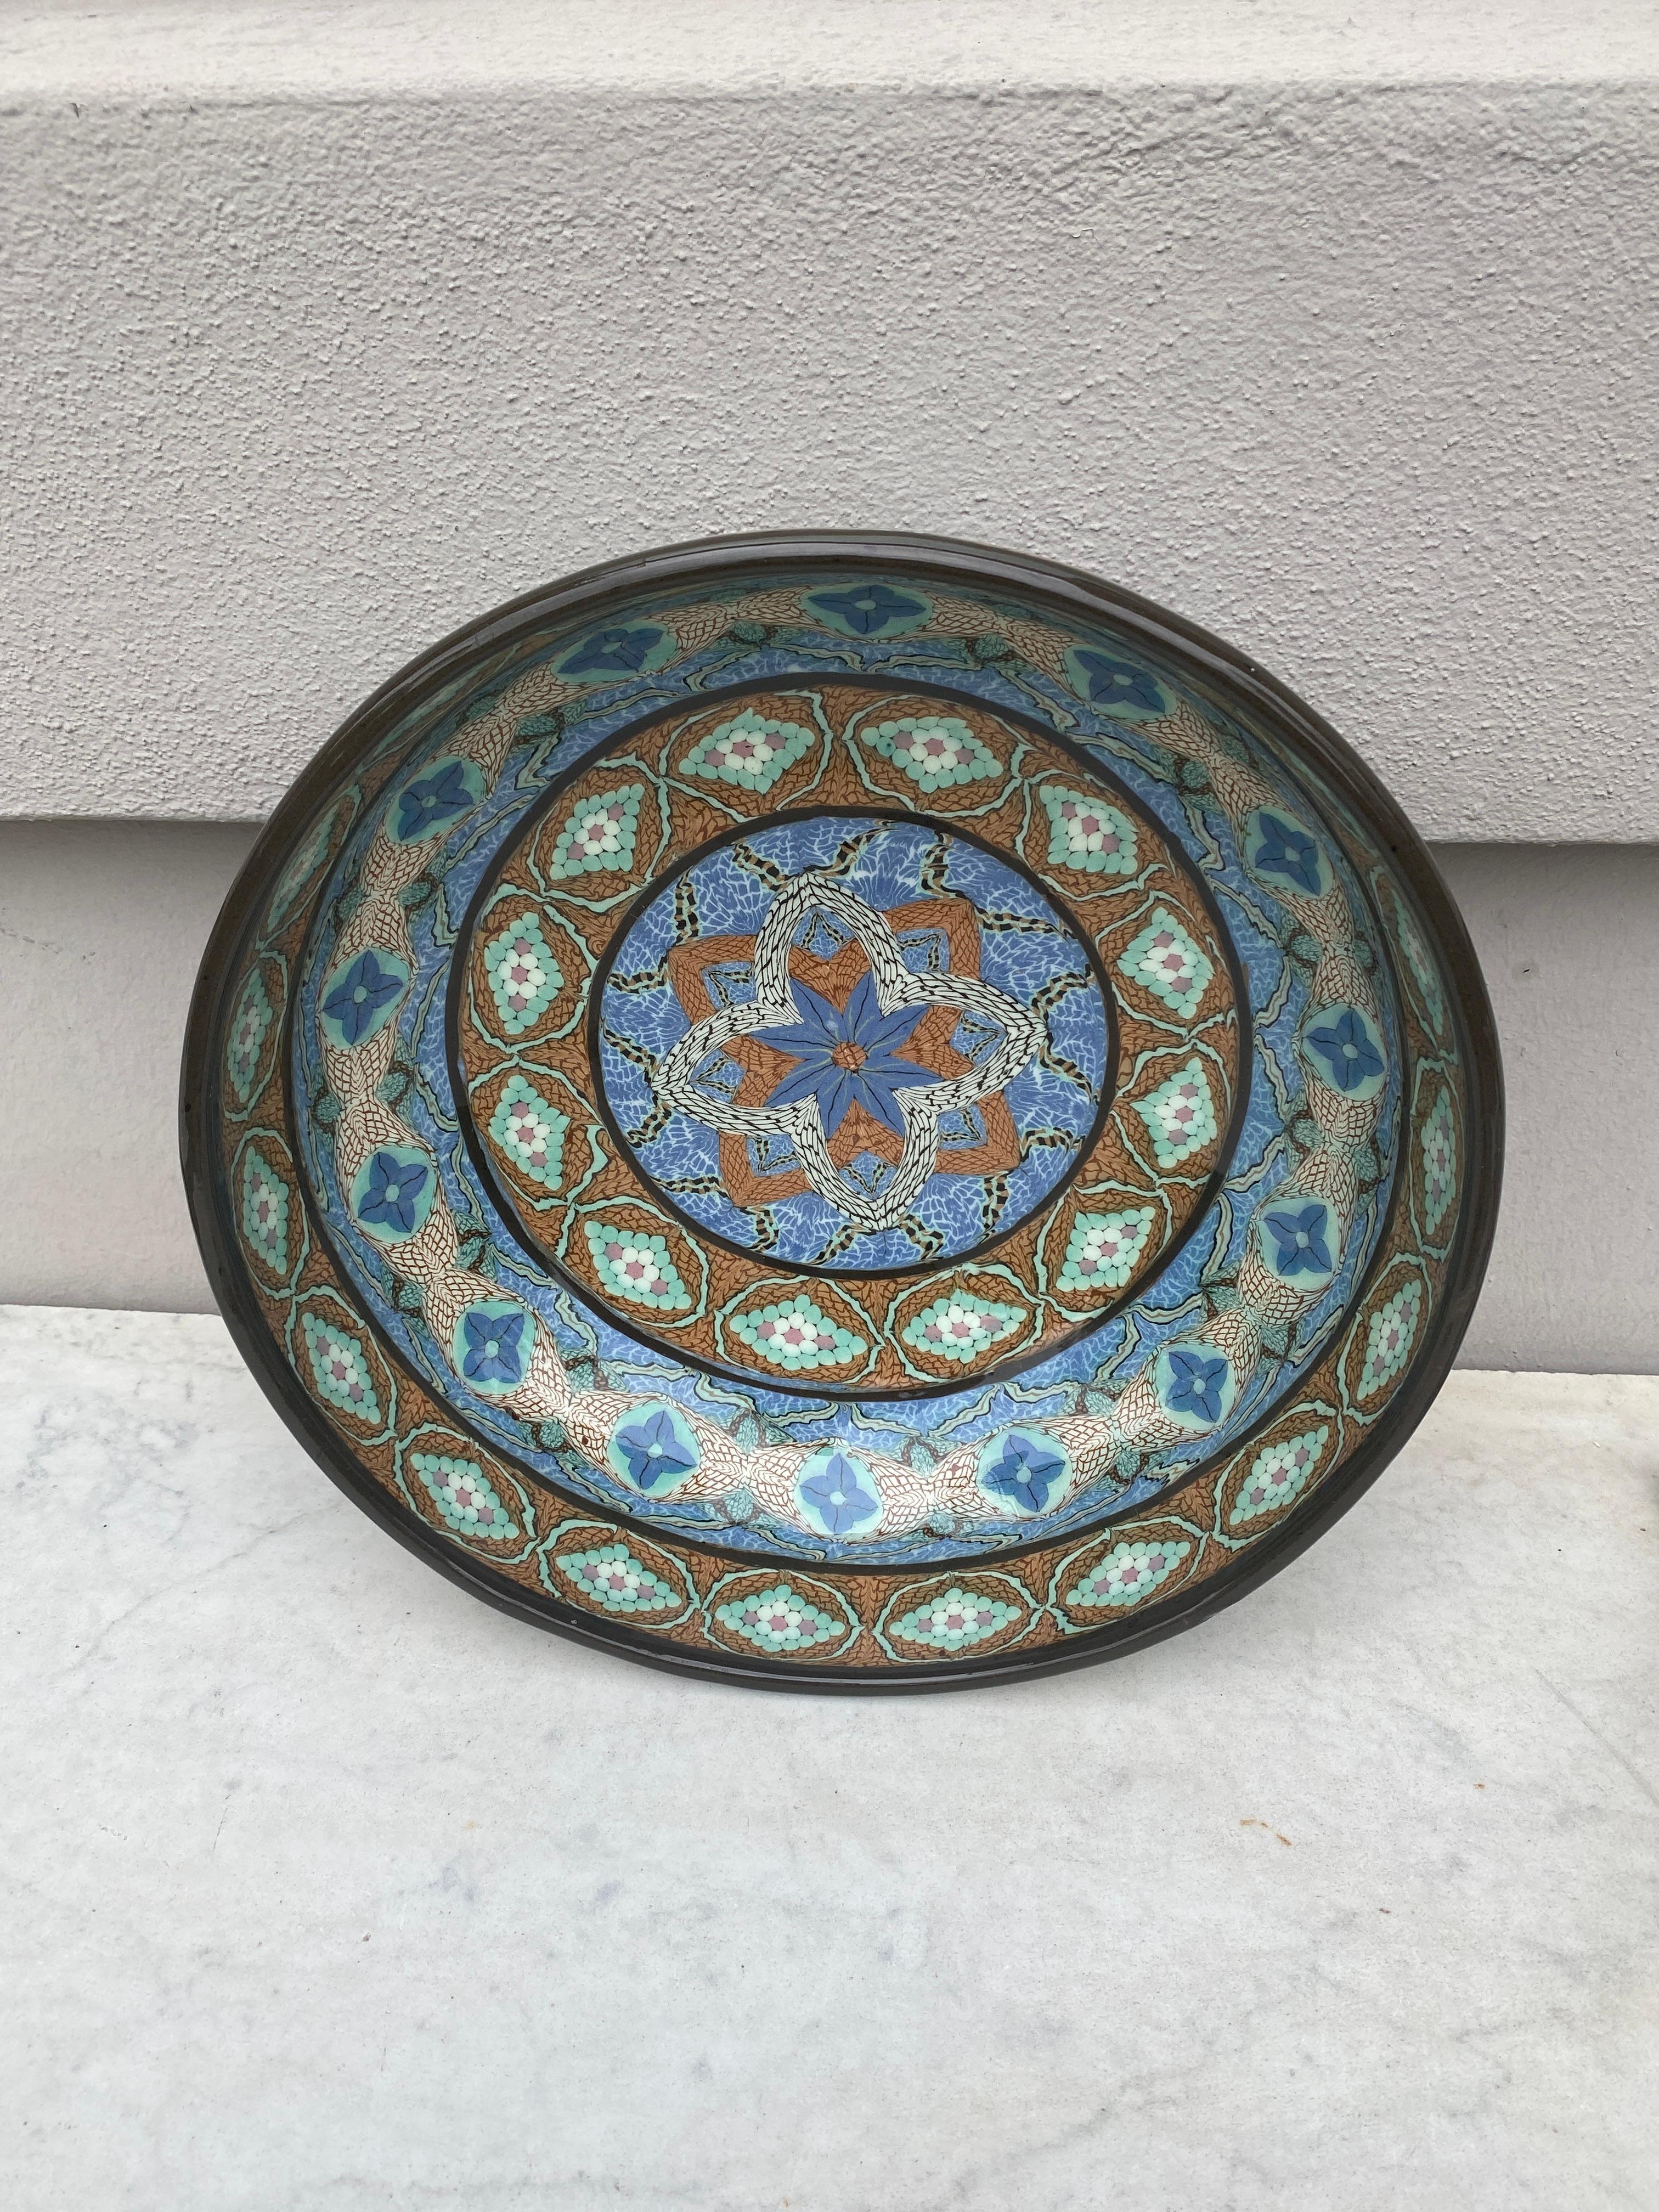 Large midcentury French Mosaic Ceramic Bowl Gerbino Vallauris.
Diameter / 12 inches.